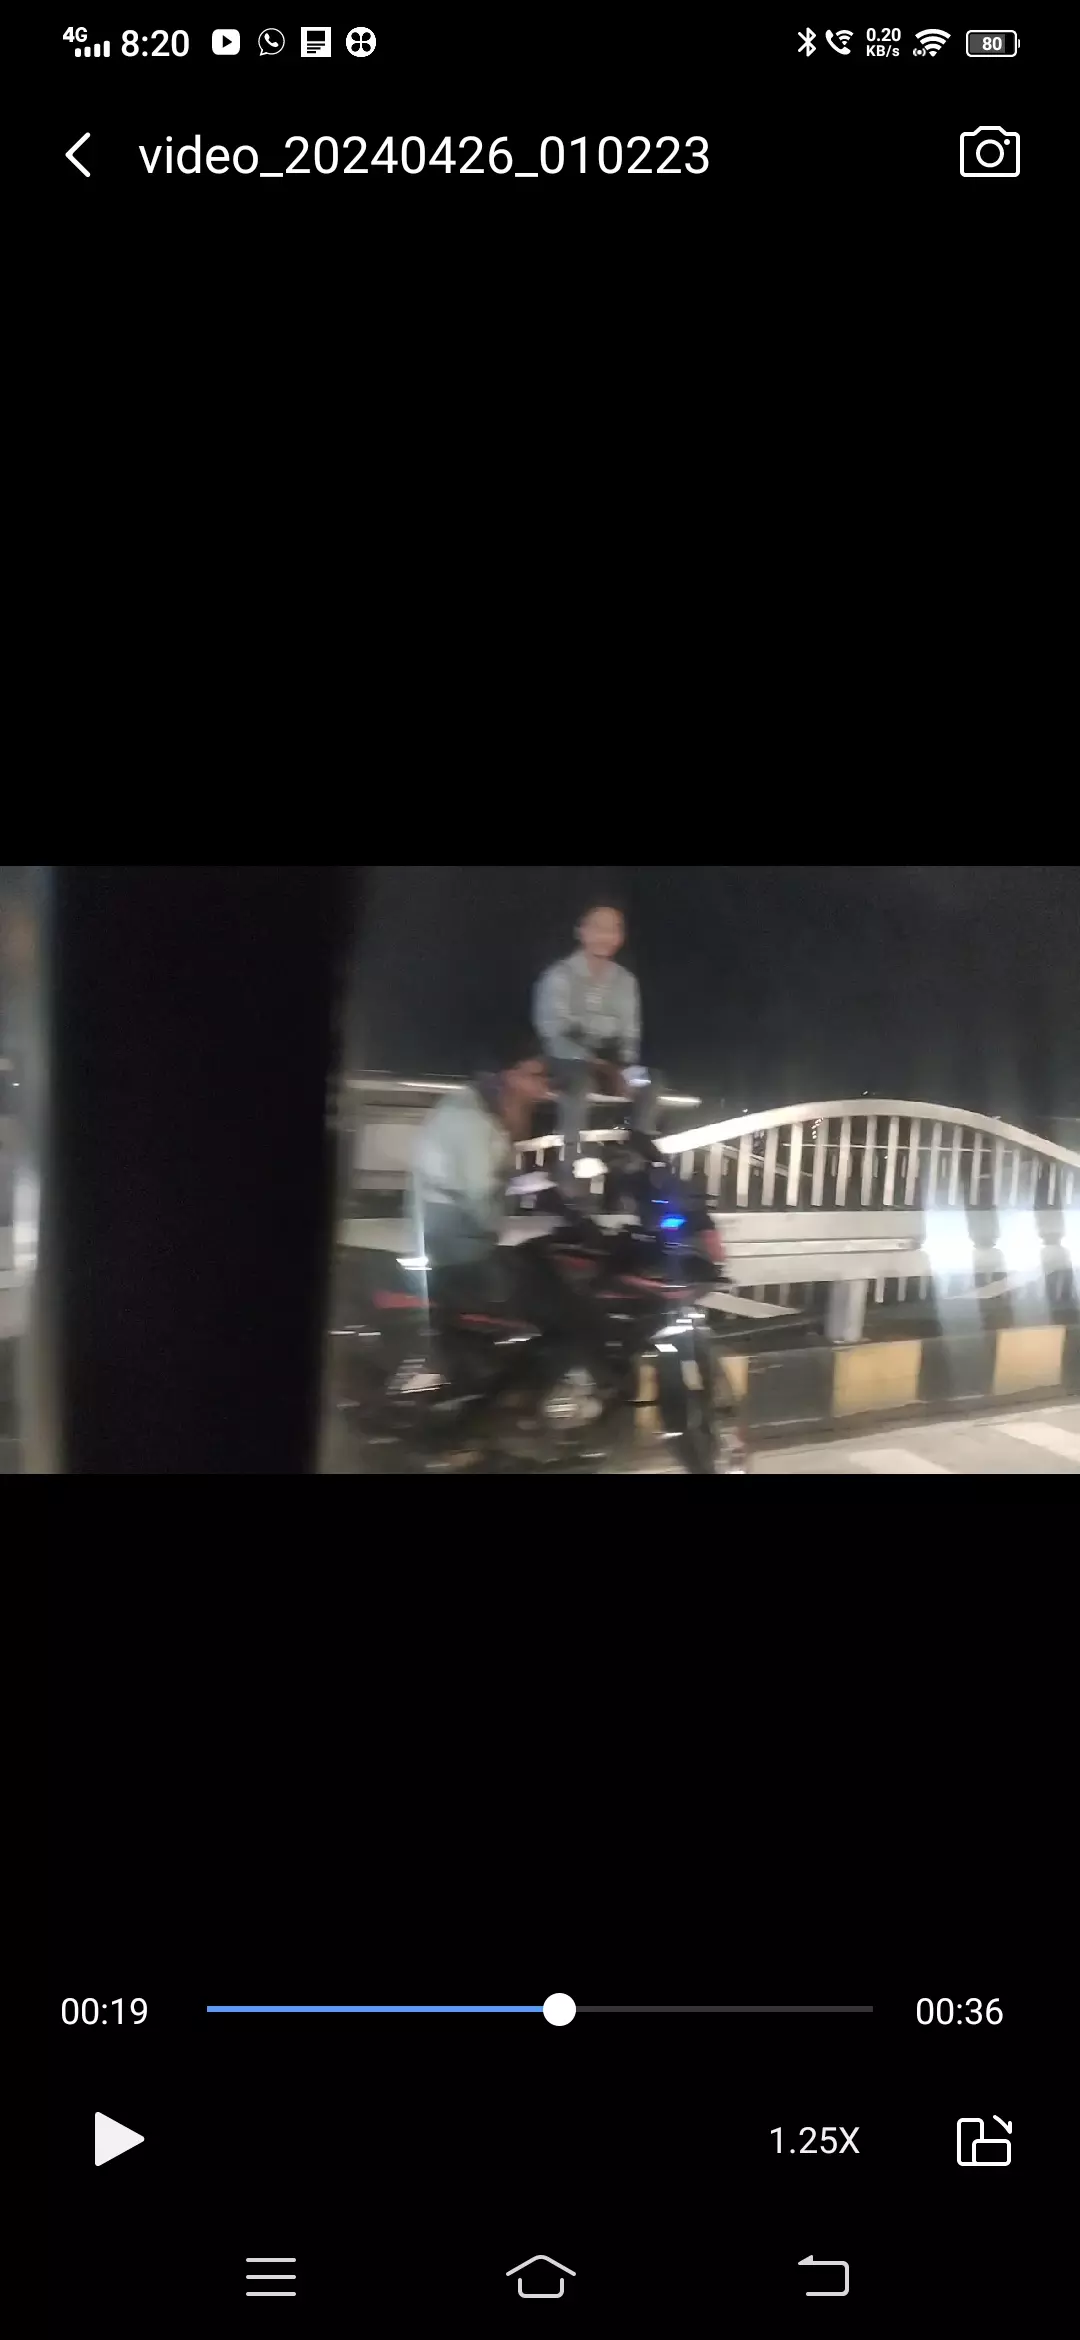 Despite Dangers, Craze for Selfies on Cable Bridge Remains High